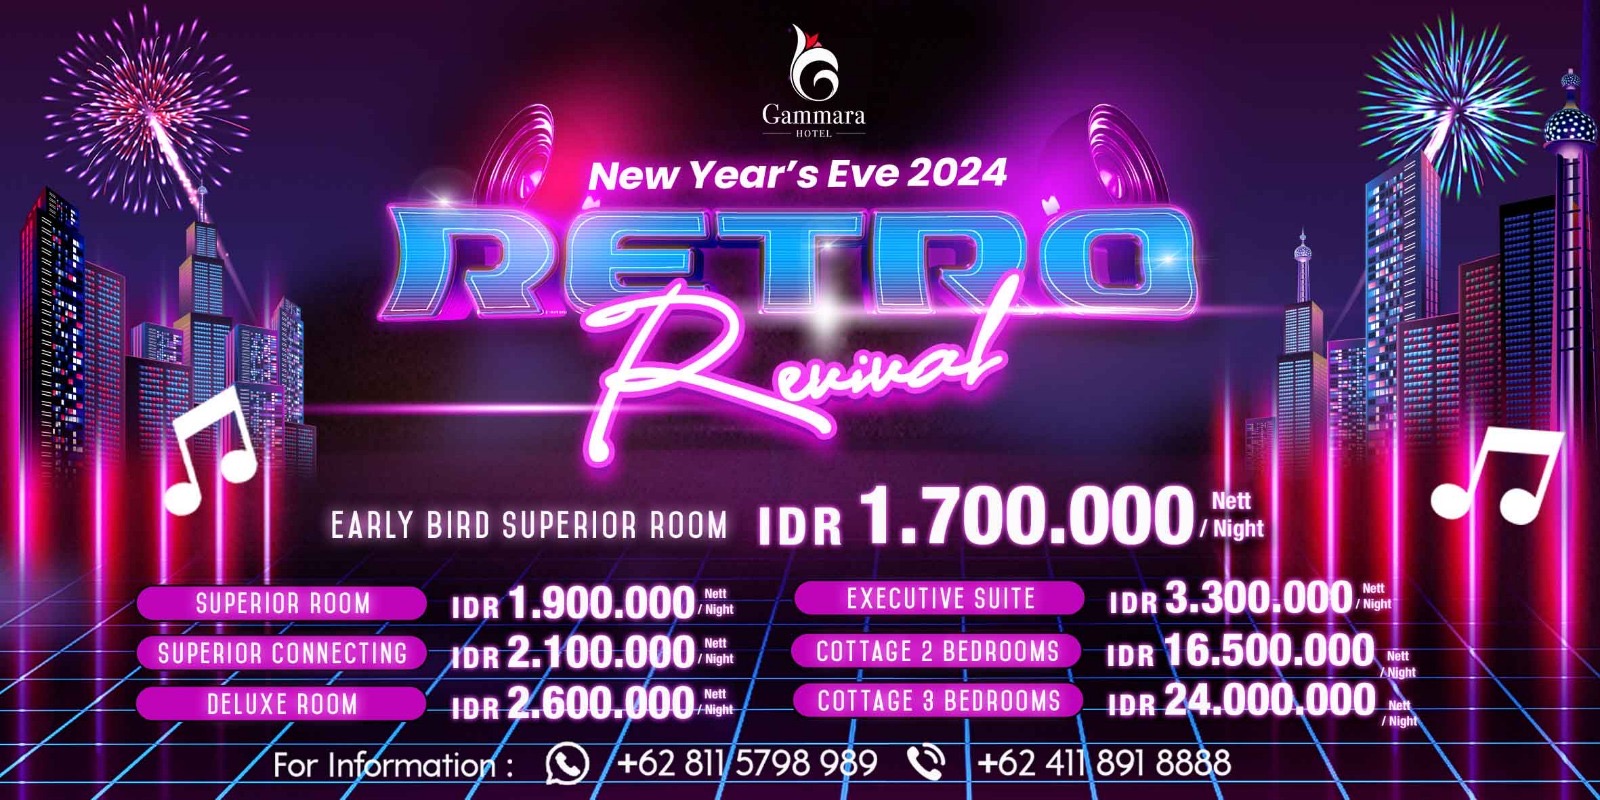 New Year’s Eve Celebration “Retro Revival” Back to 80’s Di Hotel Gammara Makassar